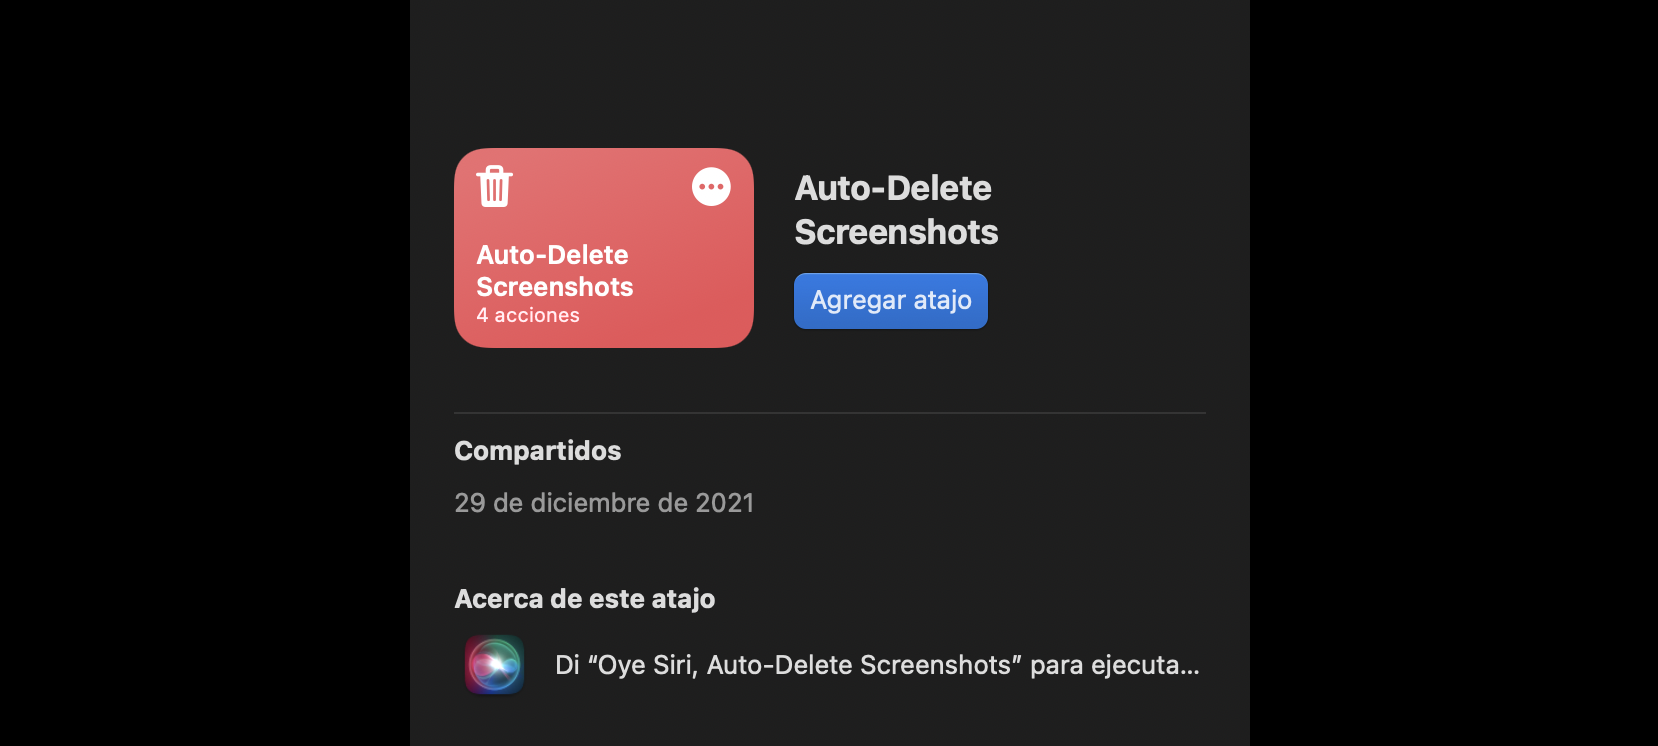 Atajo Auto-Delete Screenshots. (captura: Atajos/Jose Arana)